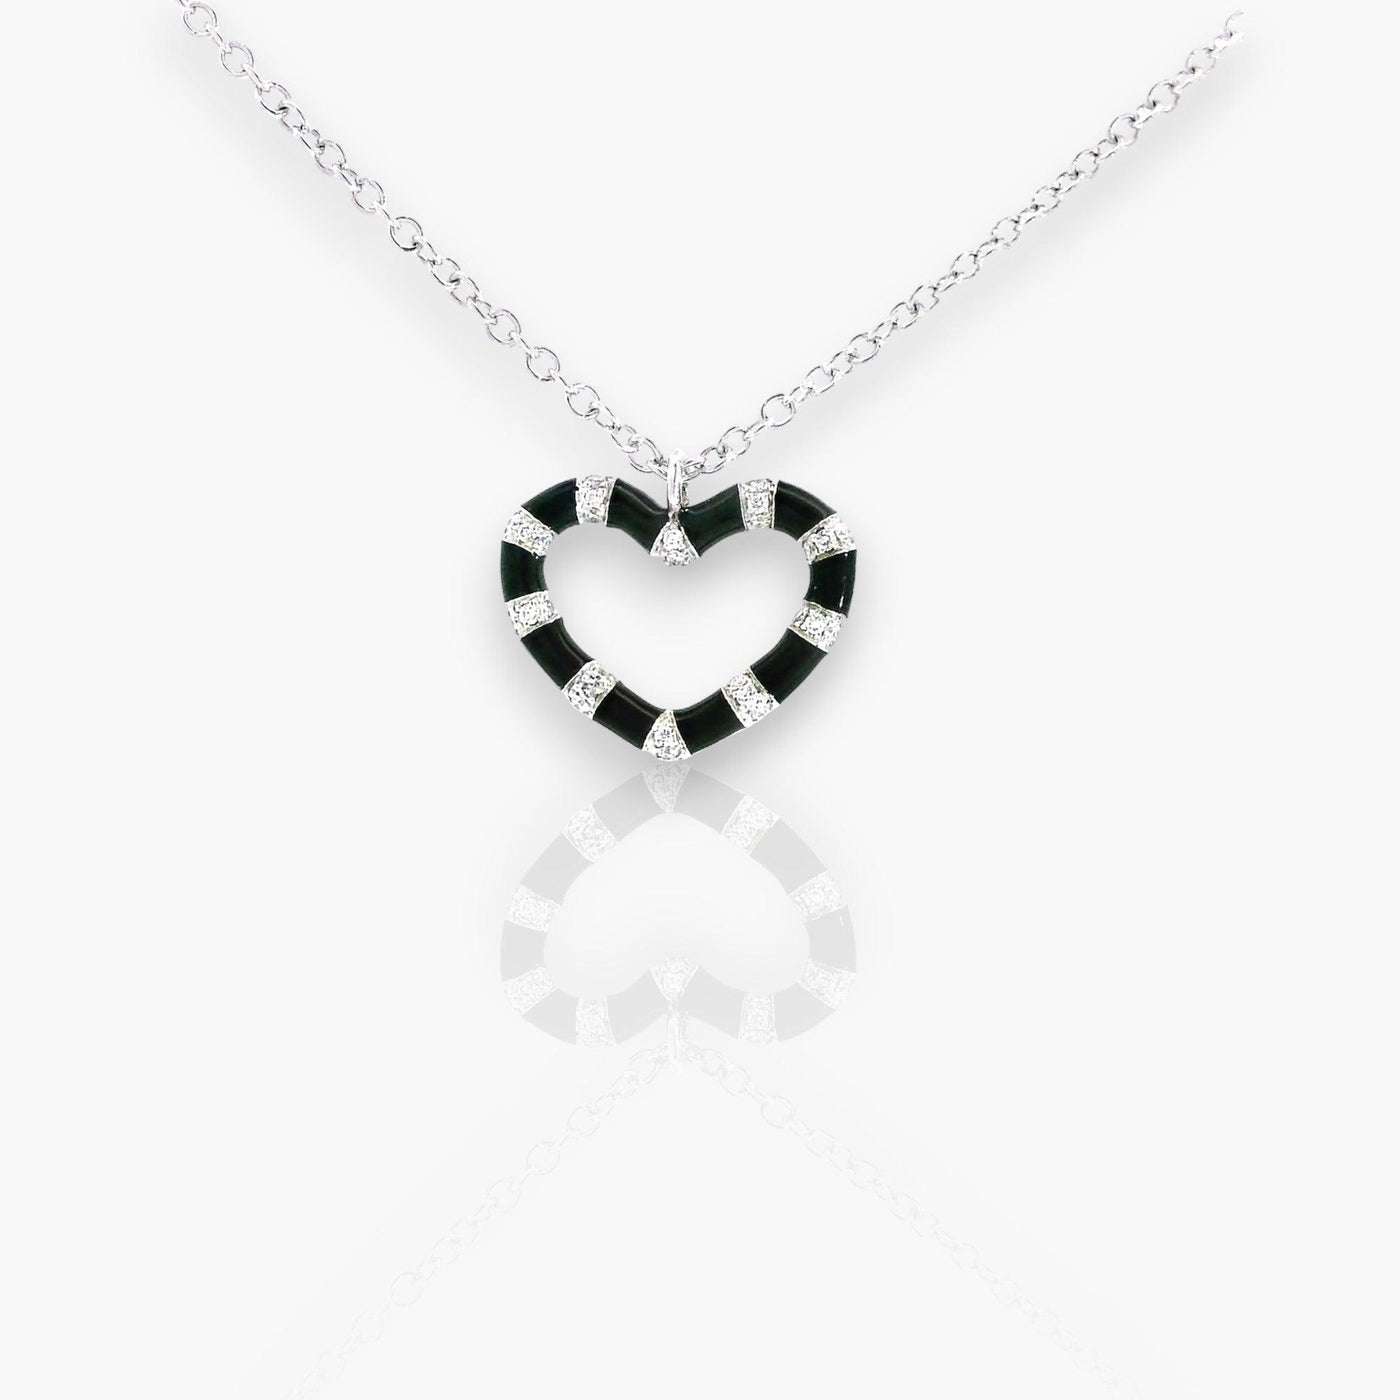 18K White Gold Necklace with a Black Enamel diamond heart - Moregola Fine Jewelry